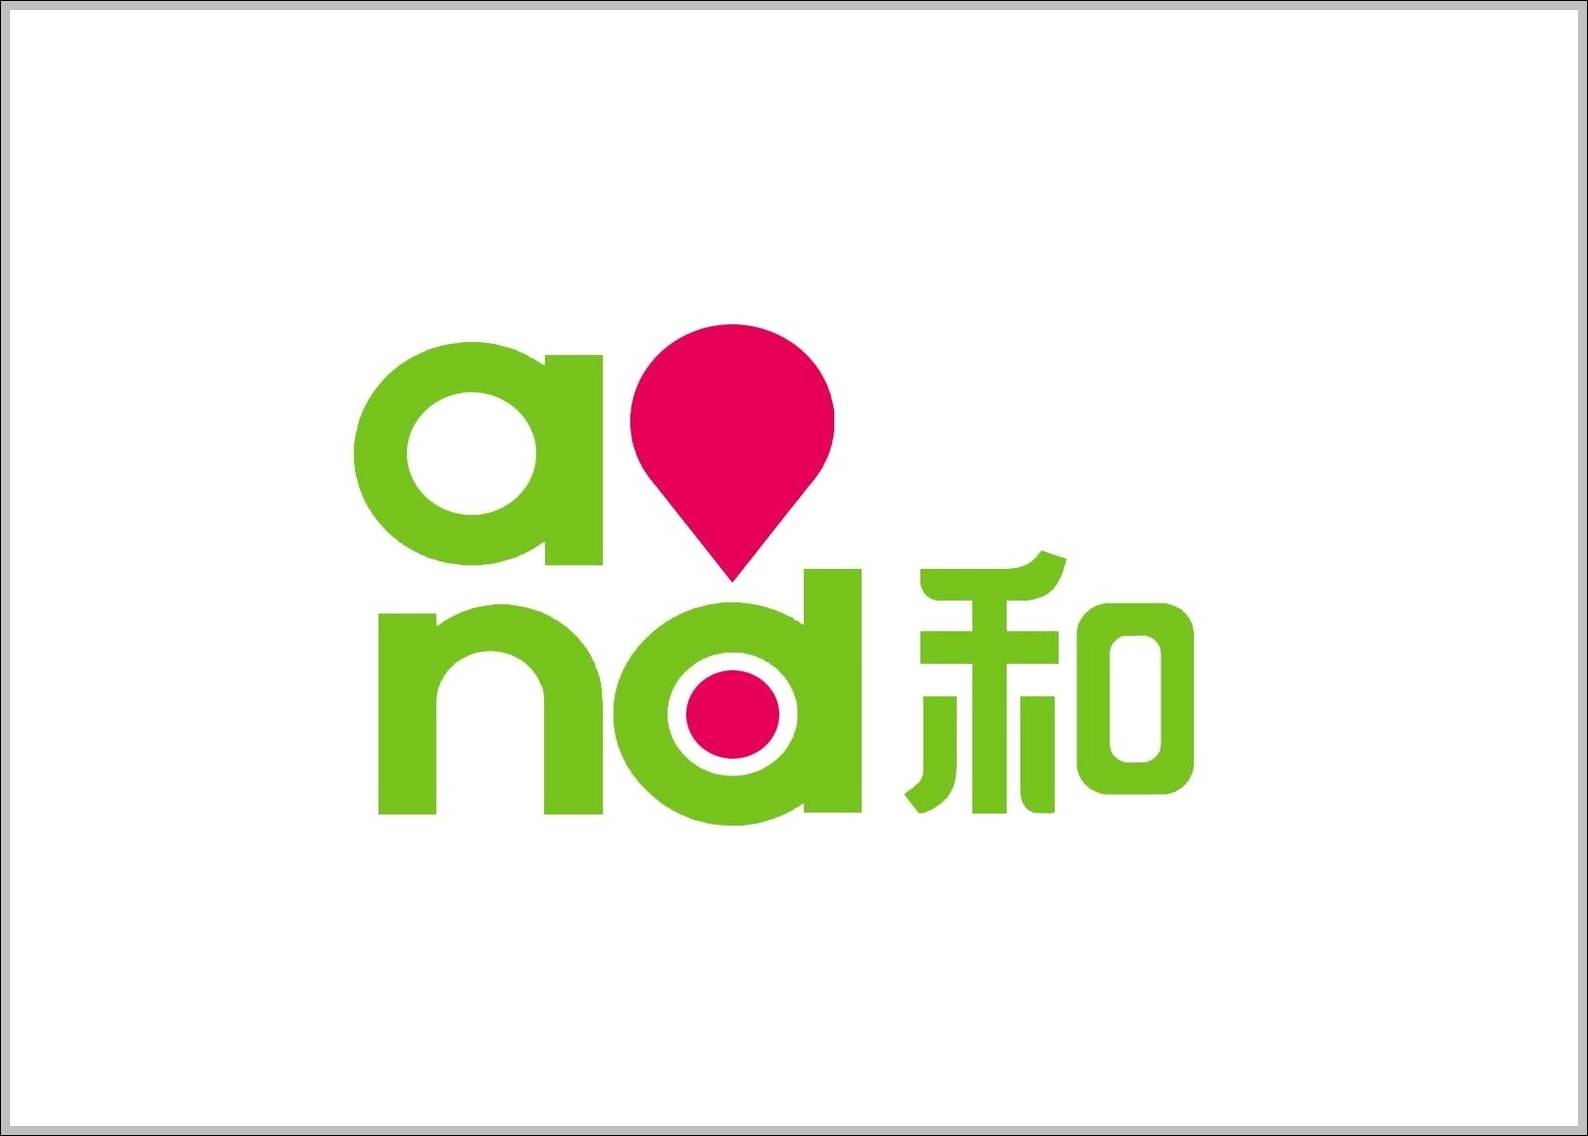 China Mobile and brand logo